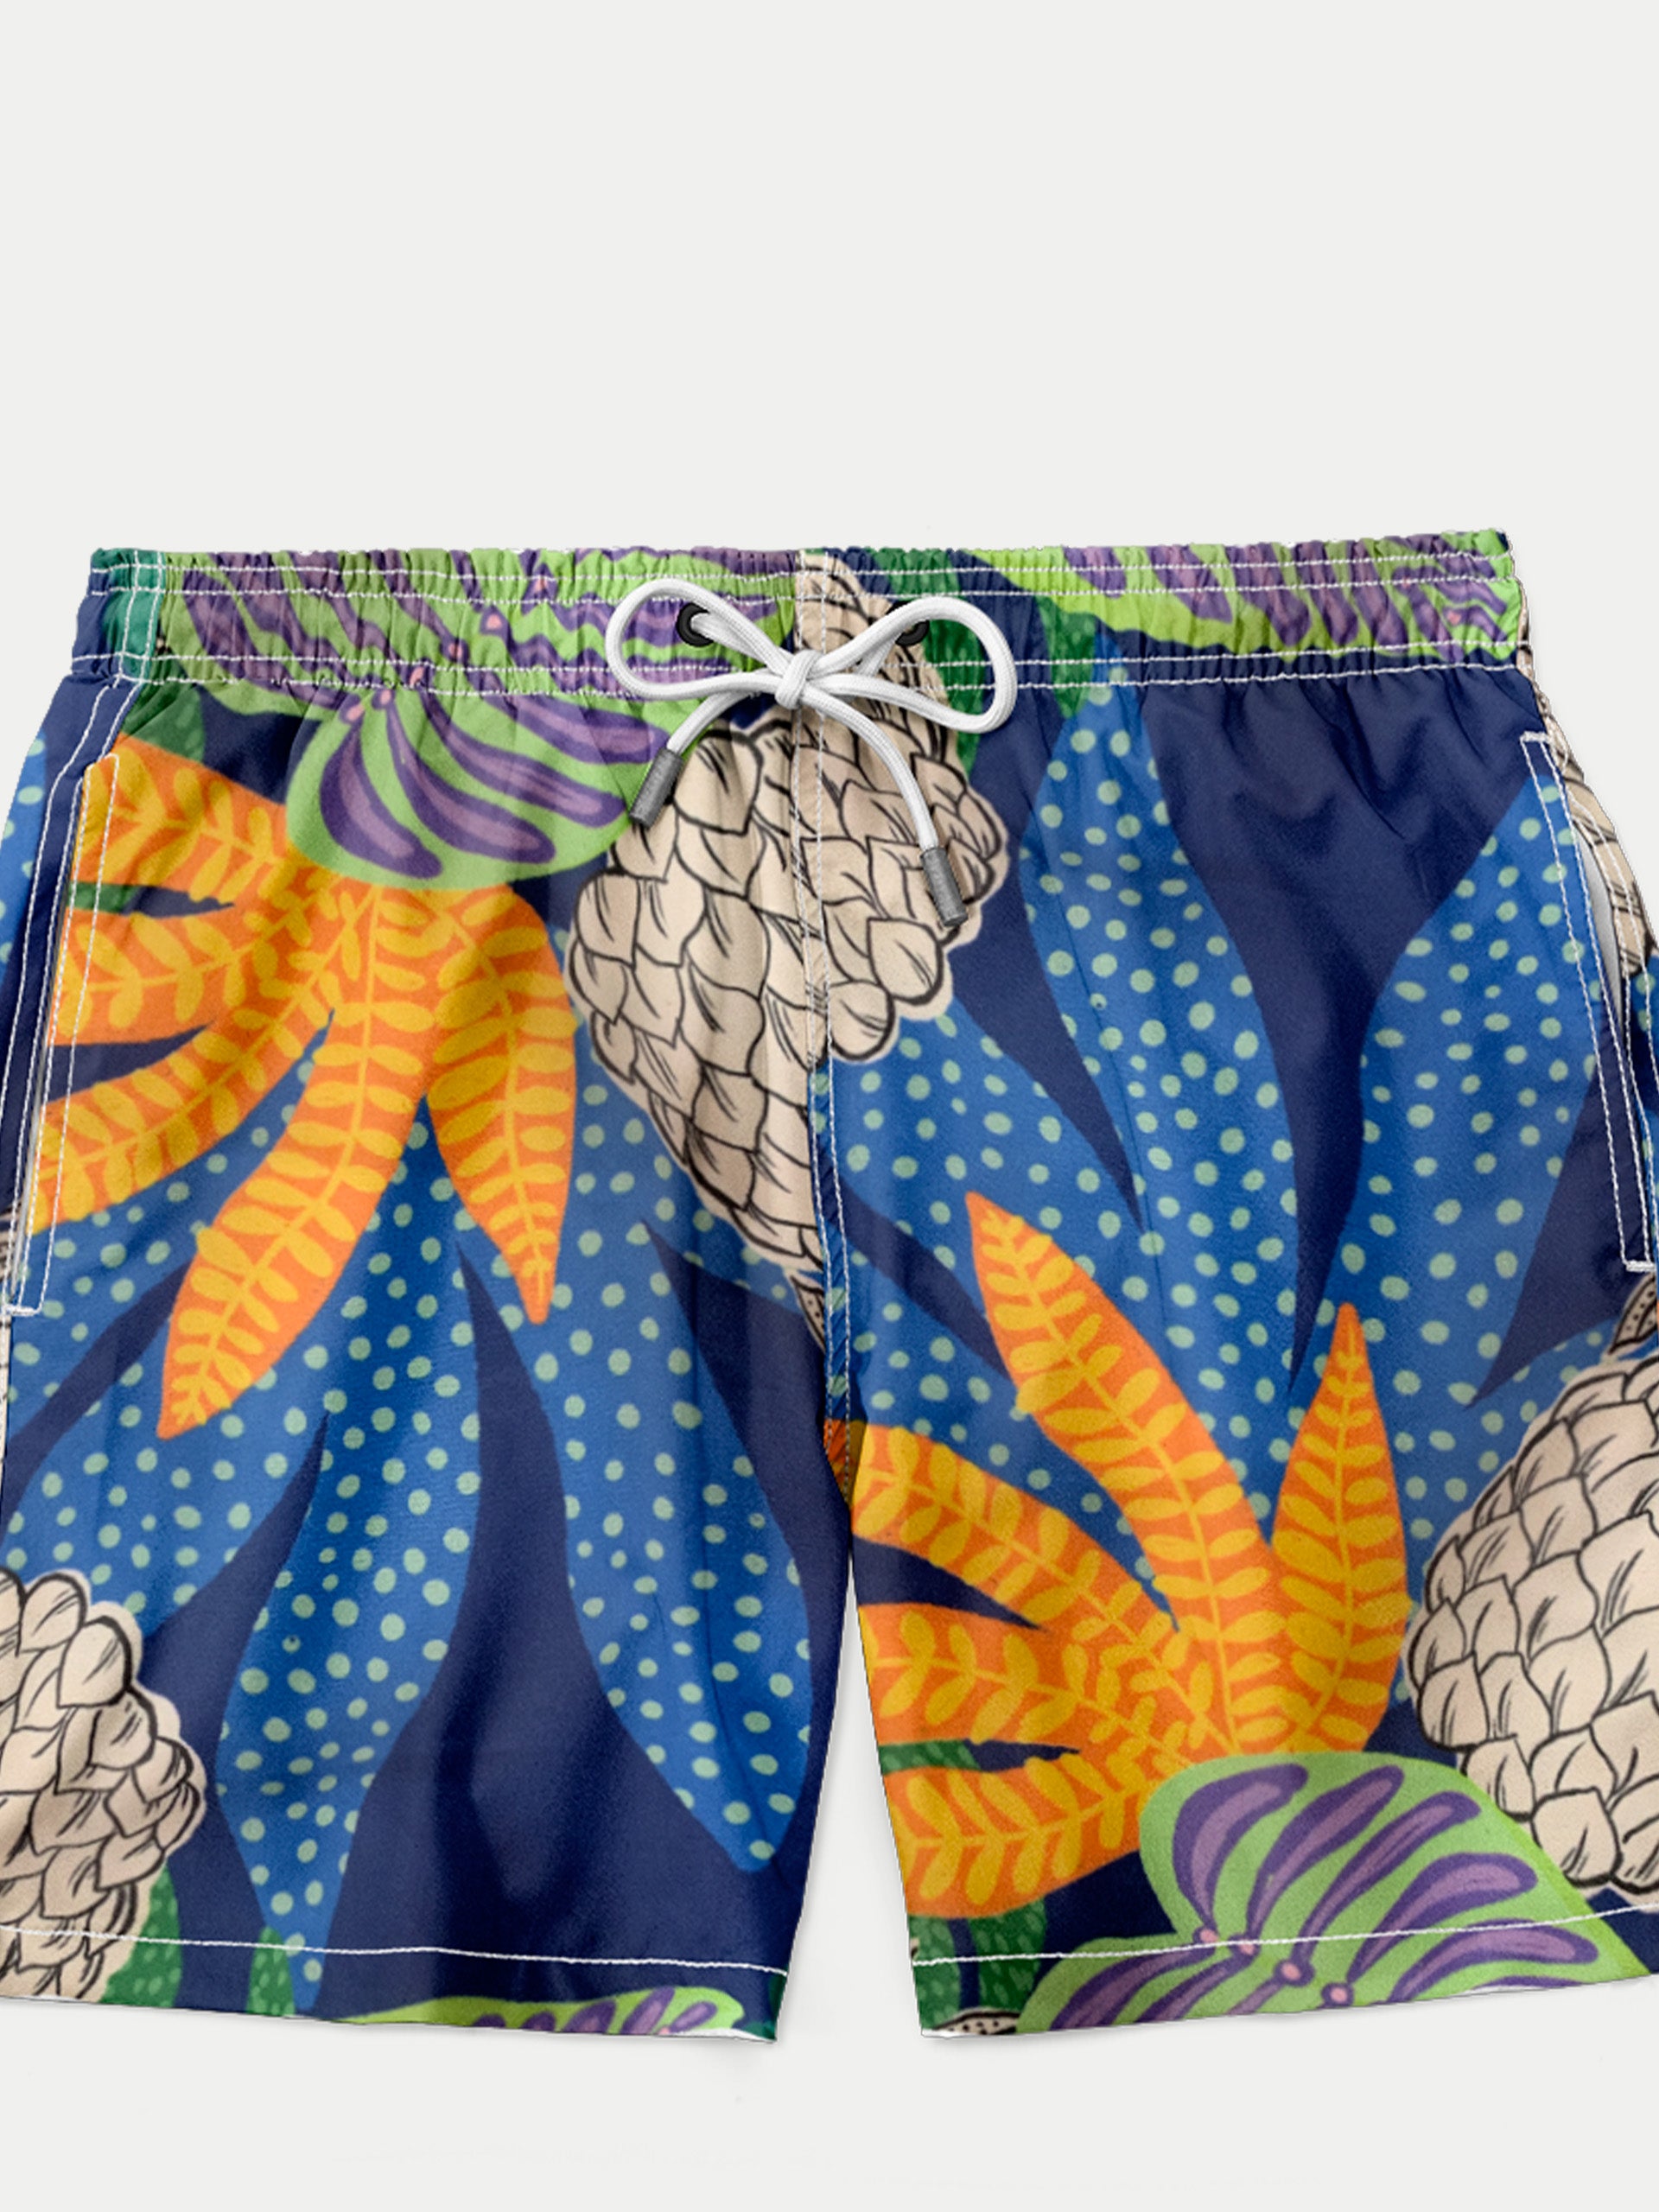 'Sunset Pineapple' Boys Swim Shorts by 98 Coast Av.